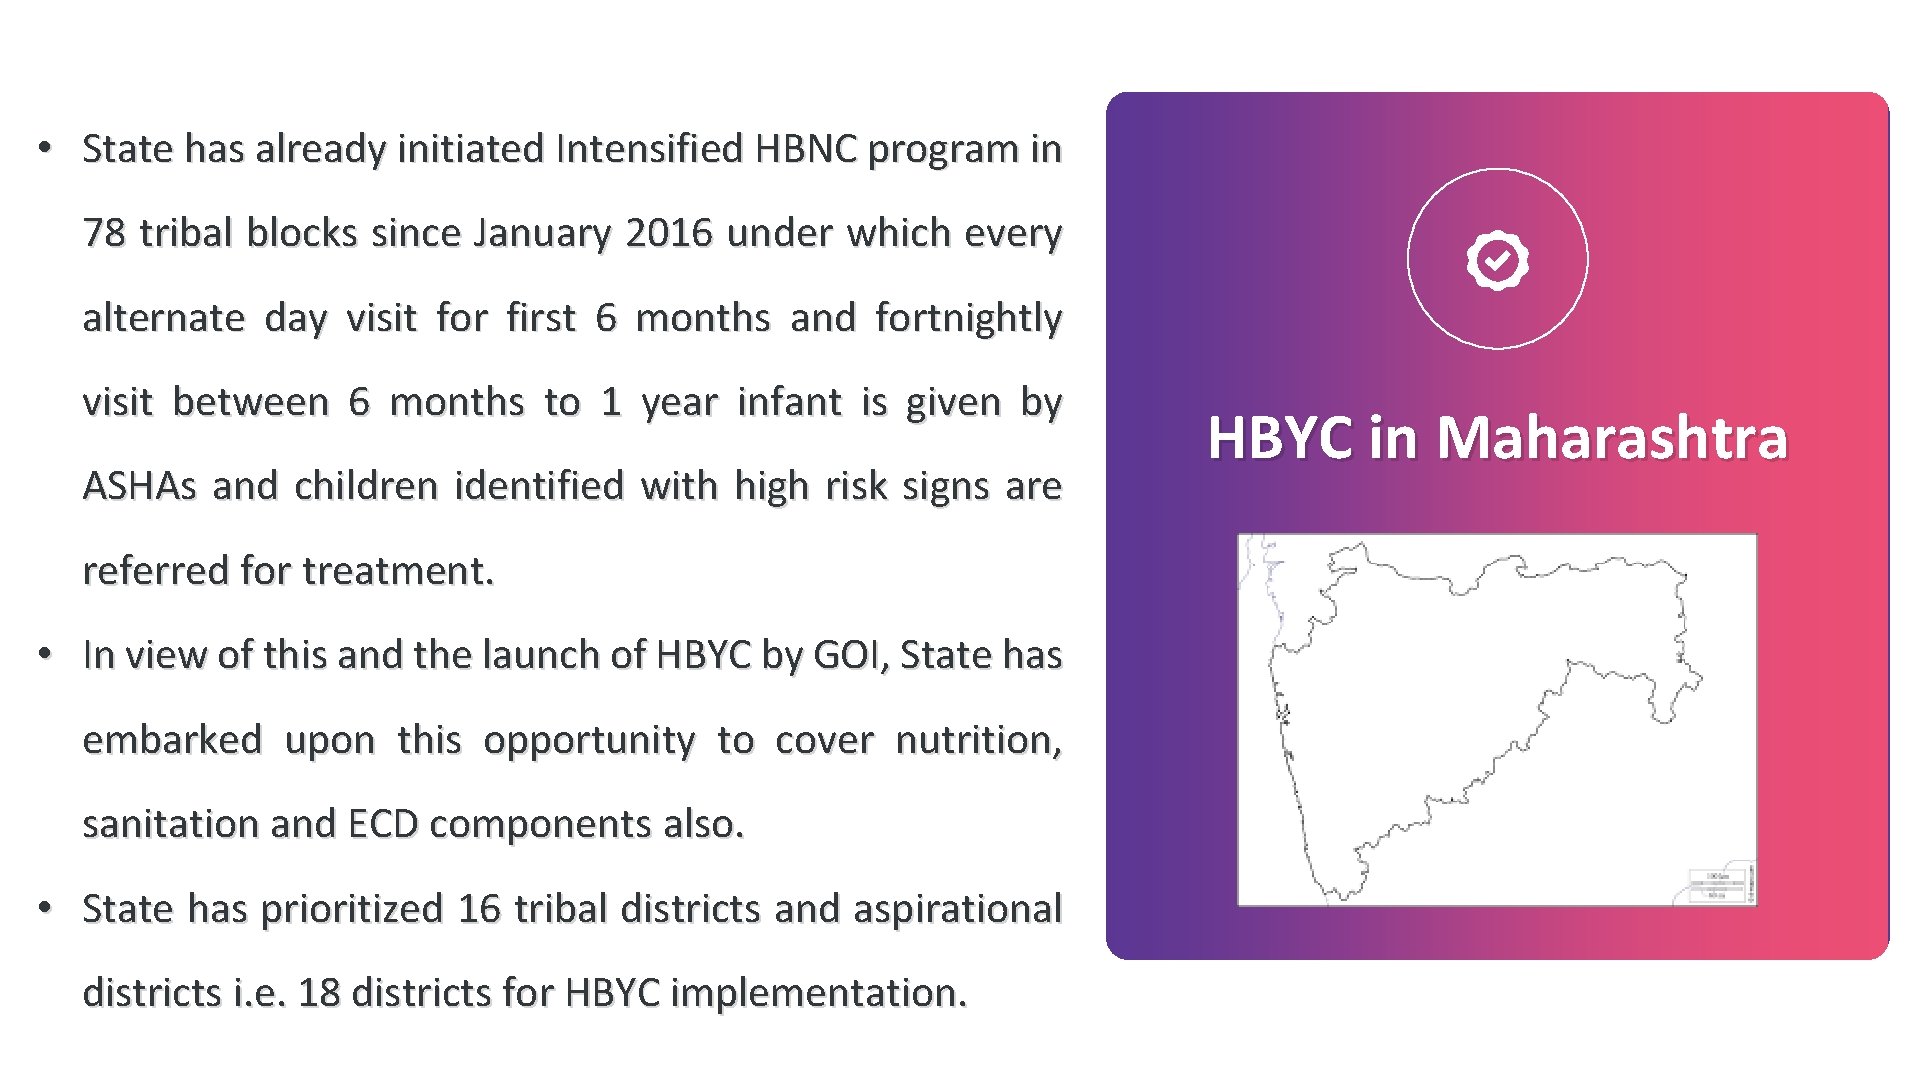  • State has already initiated Intensified HBNC program in 78 tribal blocks since